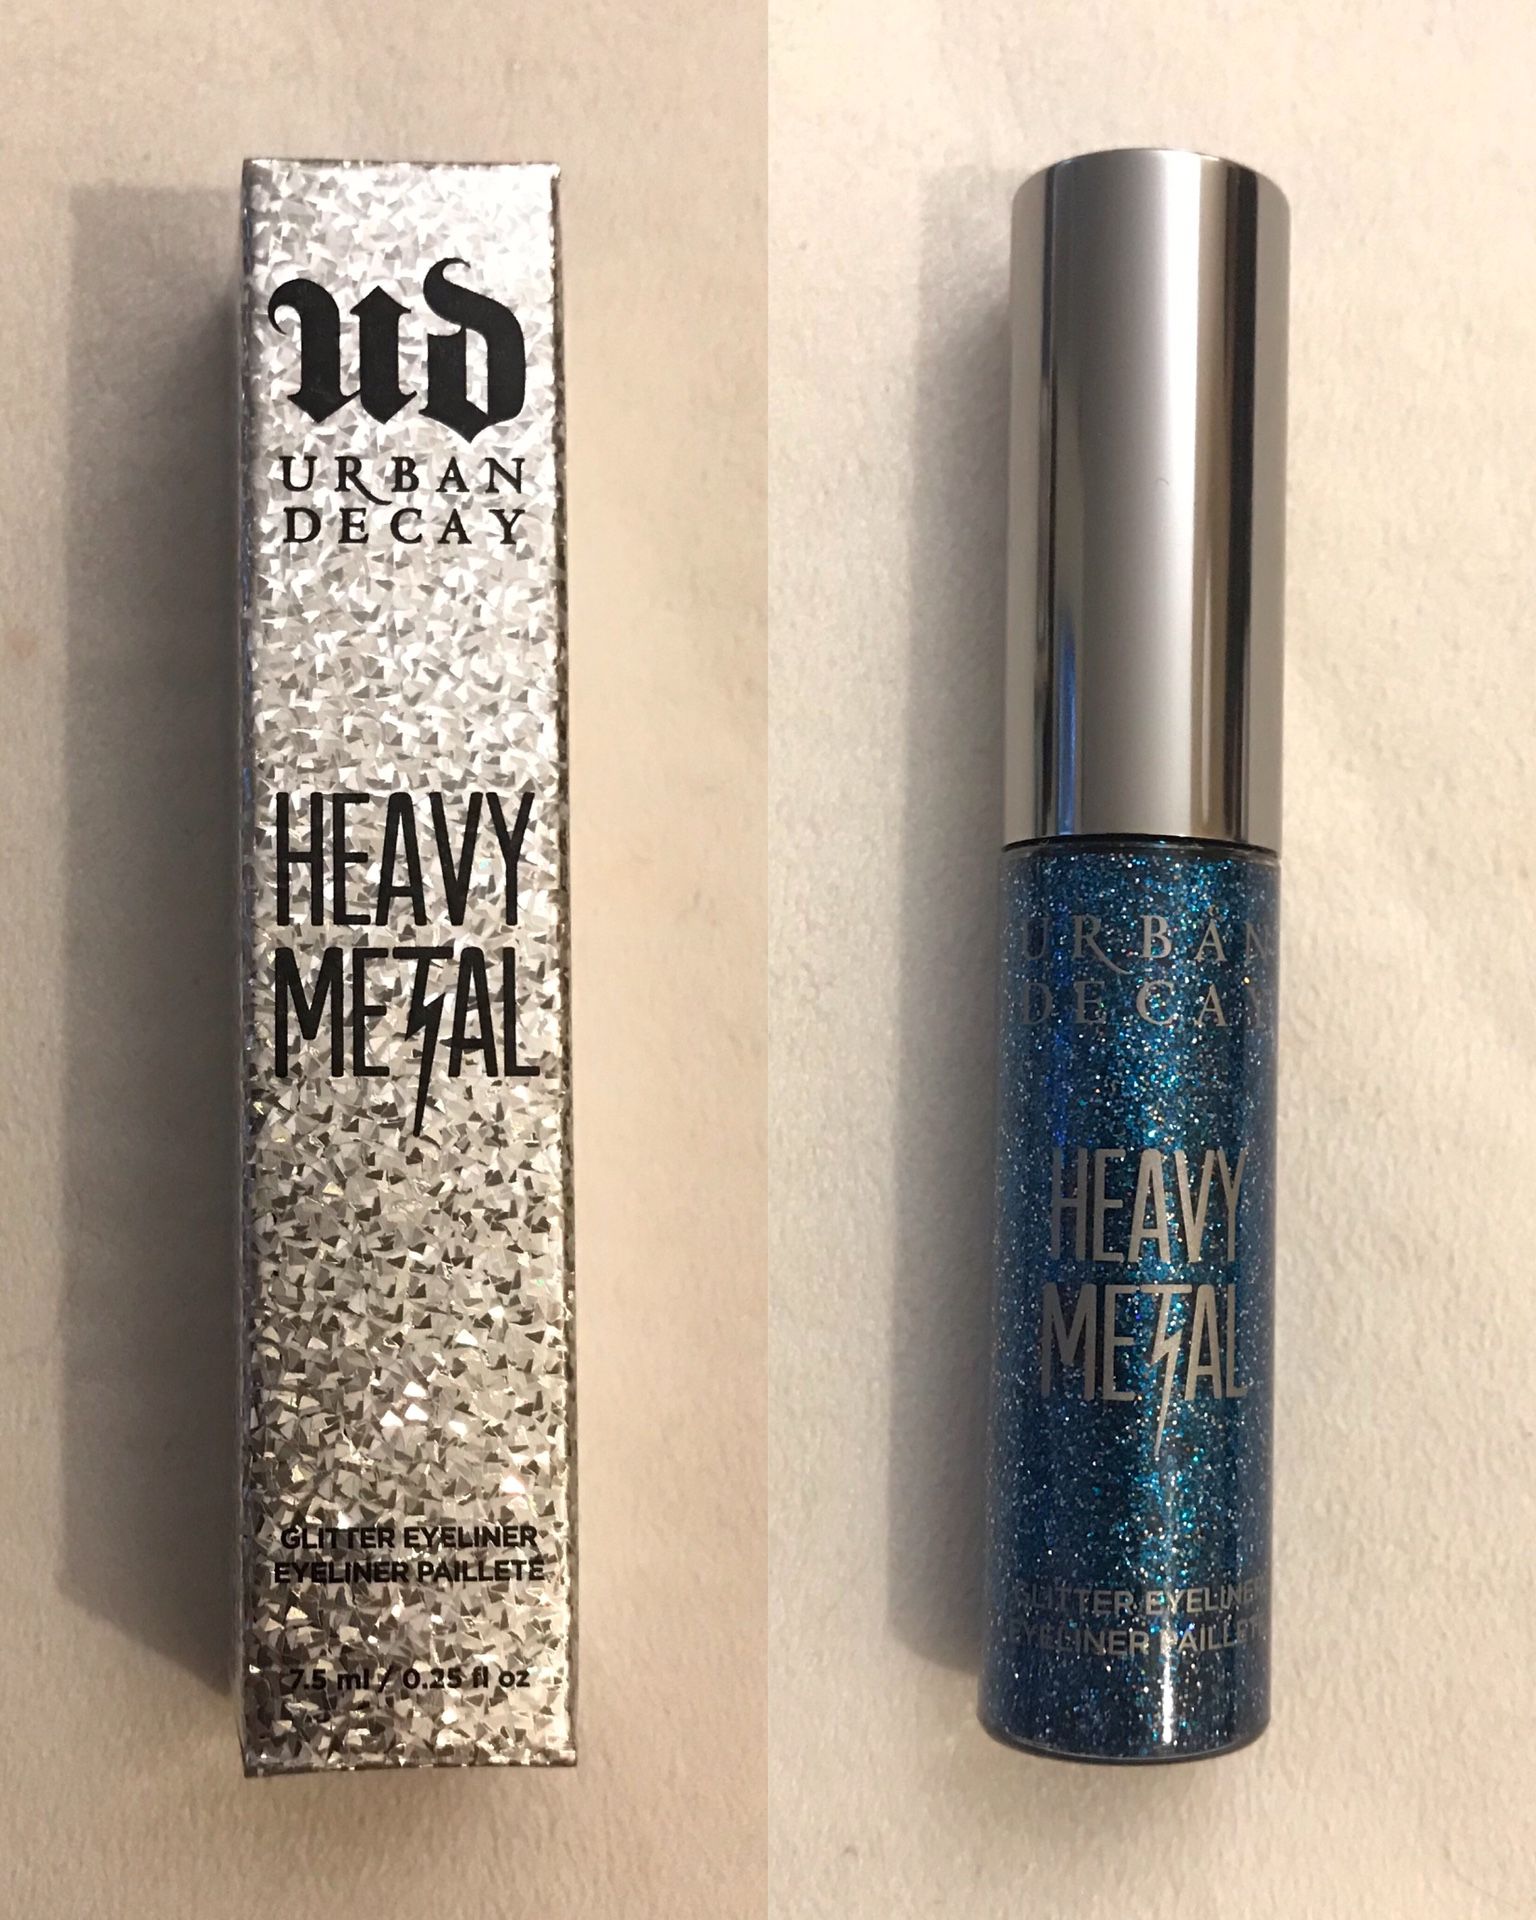 New Urban Decay Heavy Metal Glitter Eyeliner (Gamma Ray - bright blue and silver glitter)